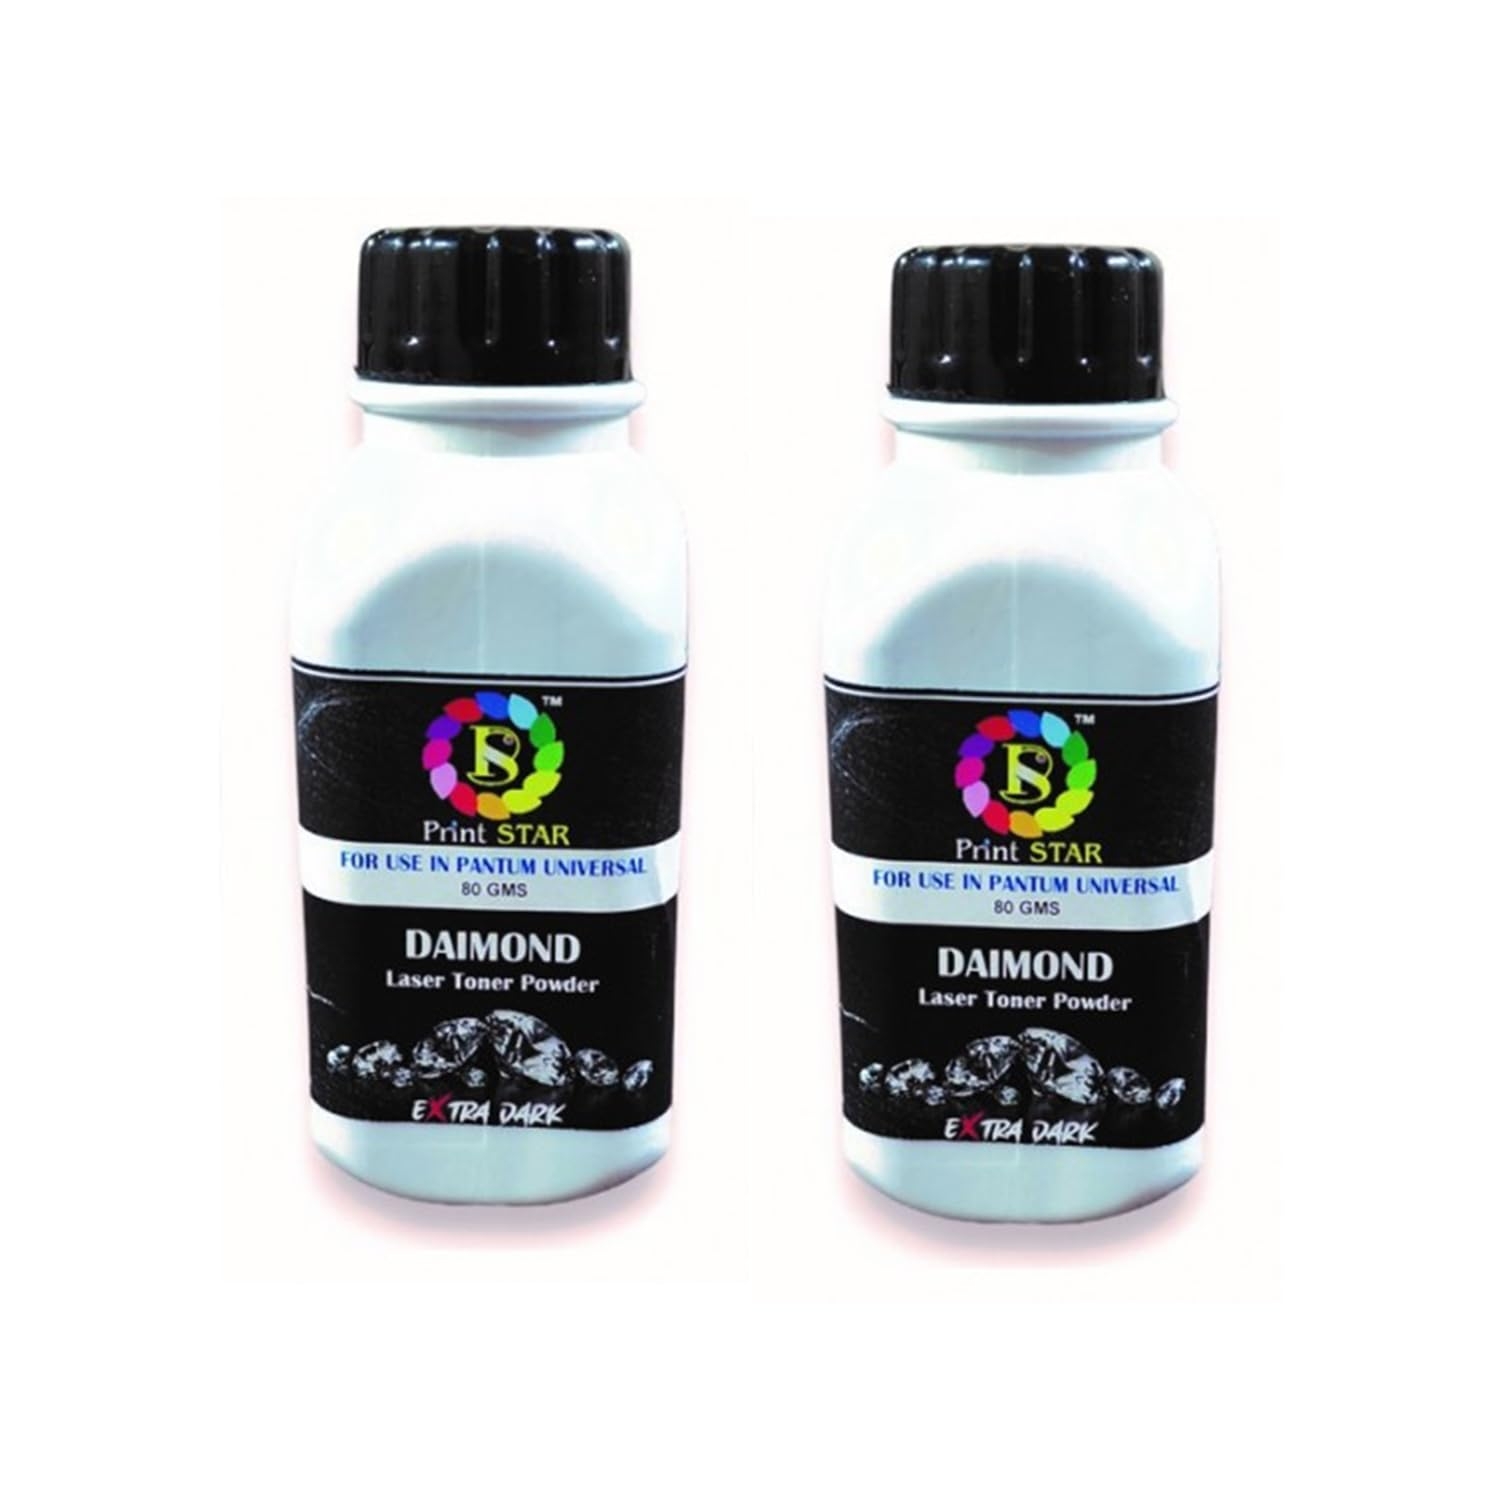 Printstar Toner Powder Compatible with PANTUM Universal, 80GMS, UltraDark (Pack of 02)